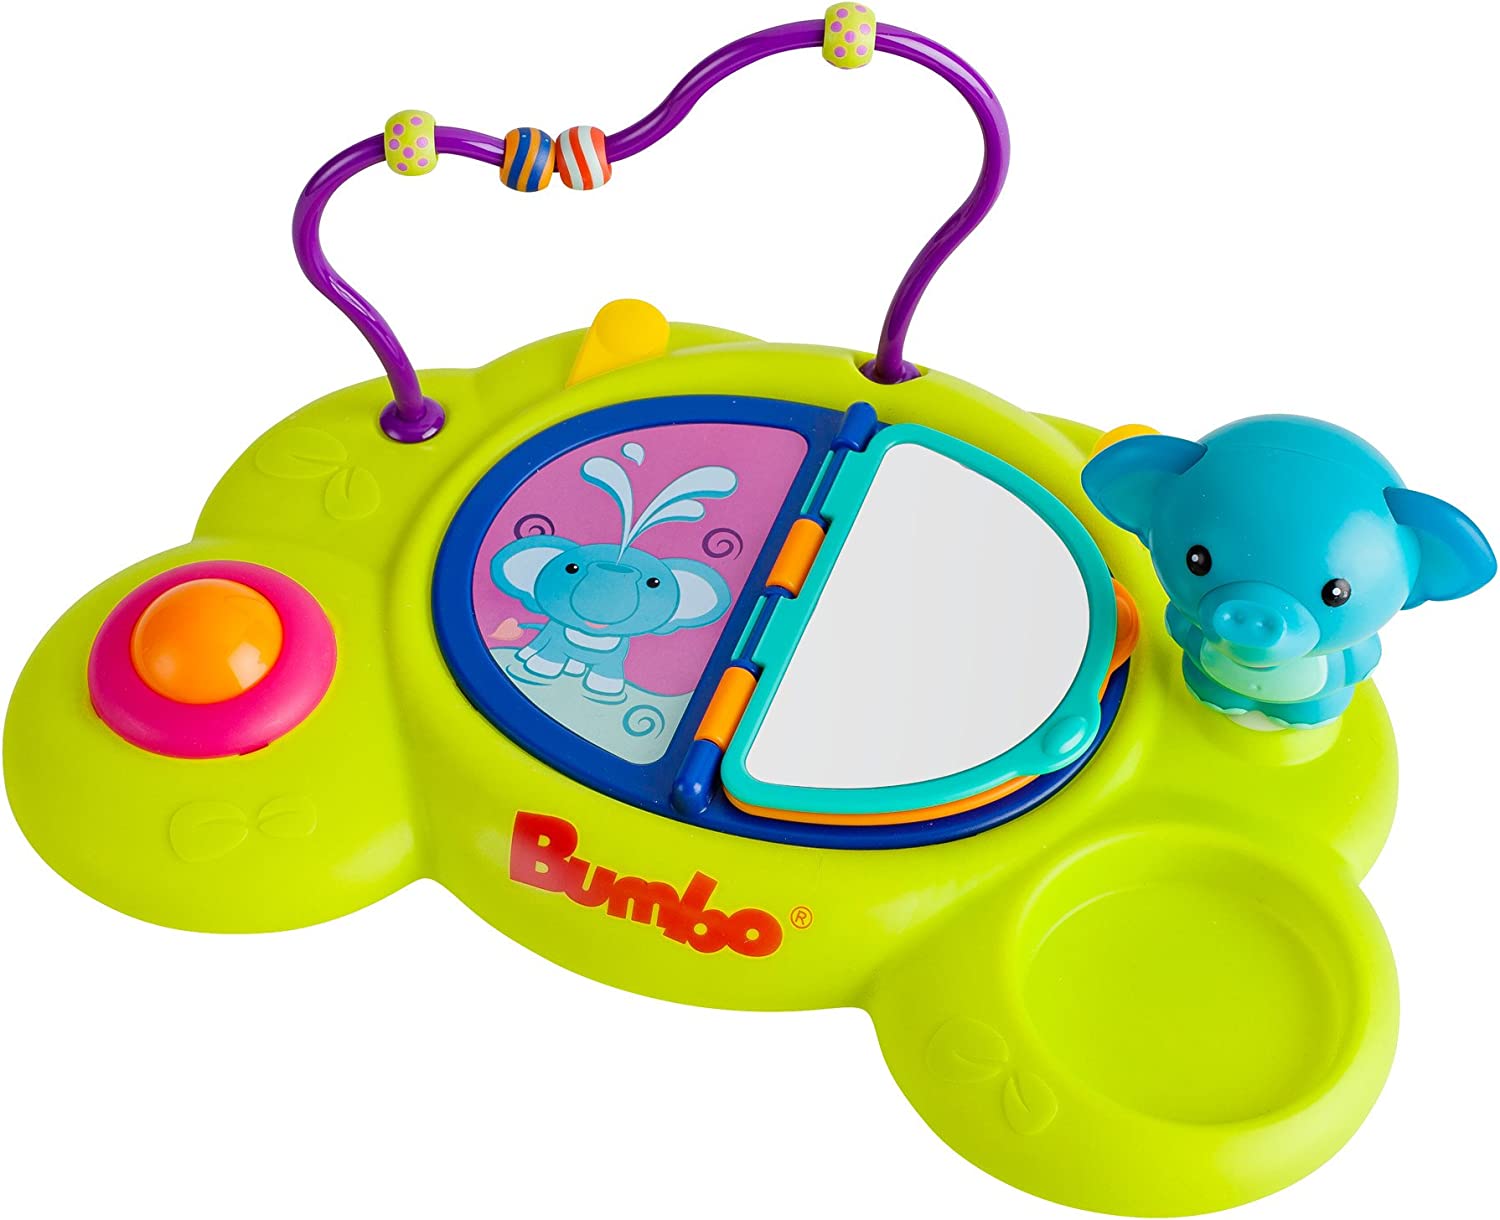 Bumbo Playtop Safari Activity Tray, -- ANB Baby